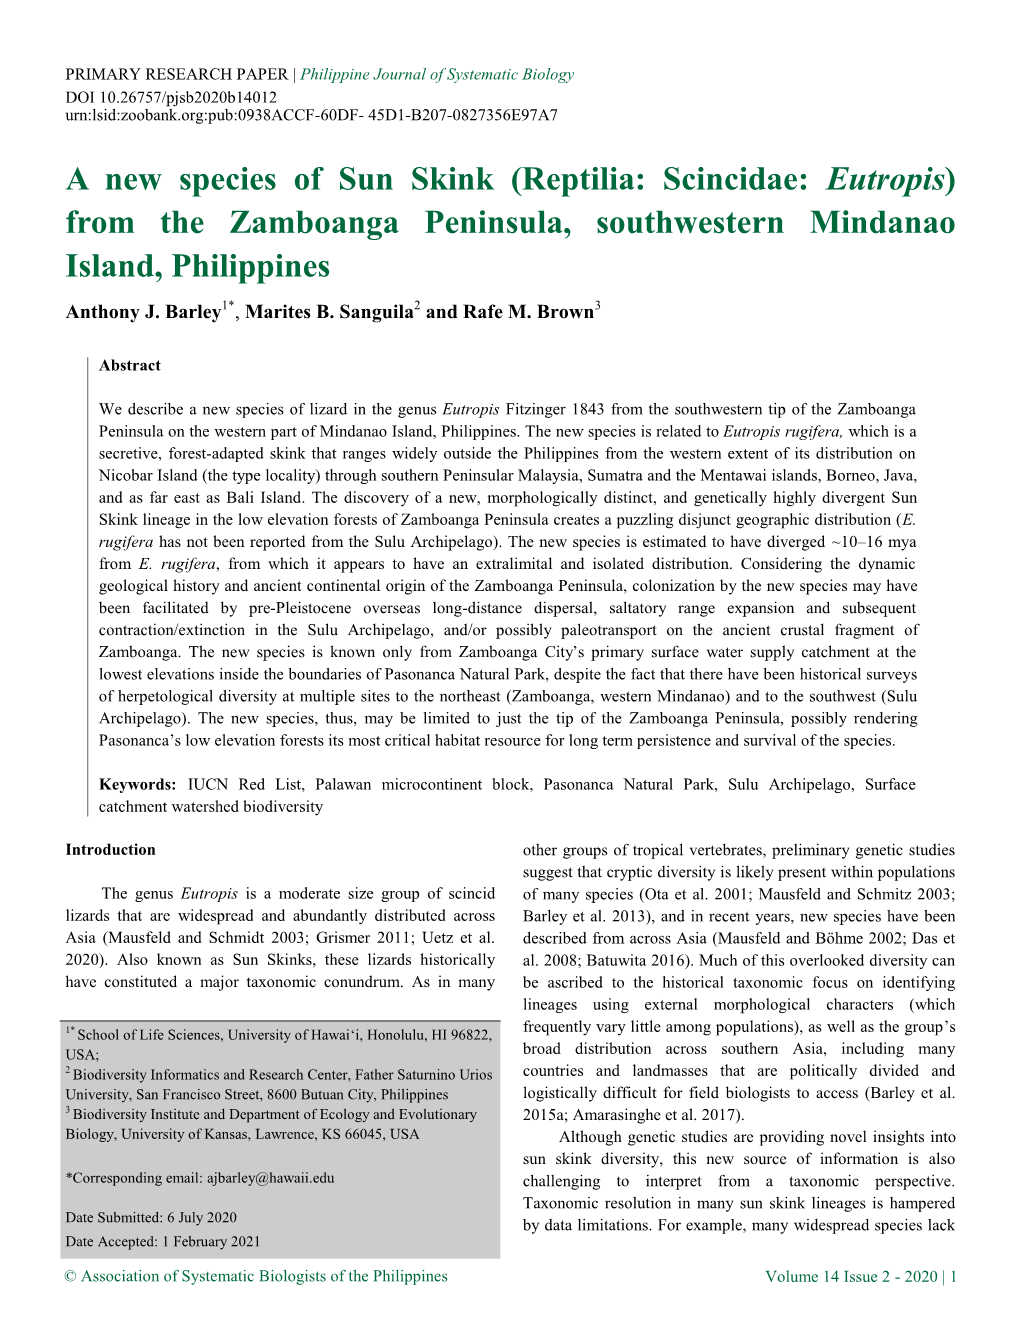 A New Species of Sun Skink (Reptilia: Scincidae: Eutropis) from the Zamboanga Peninsula, Southwestern Mindanao Island, Philippines Anthony J